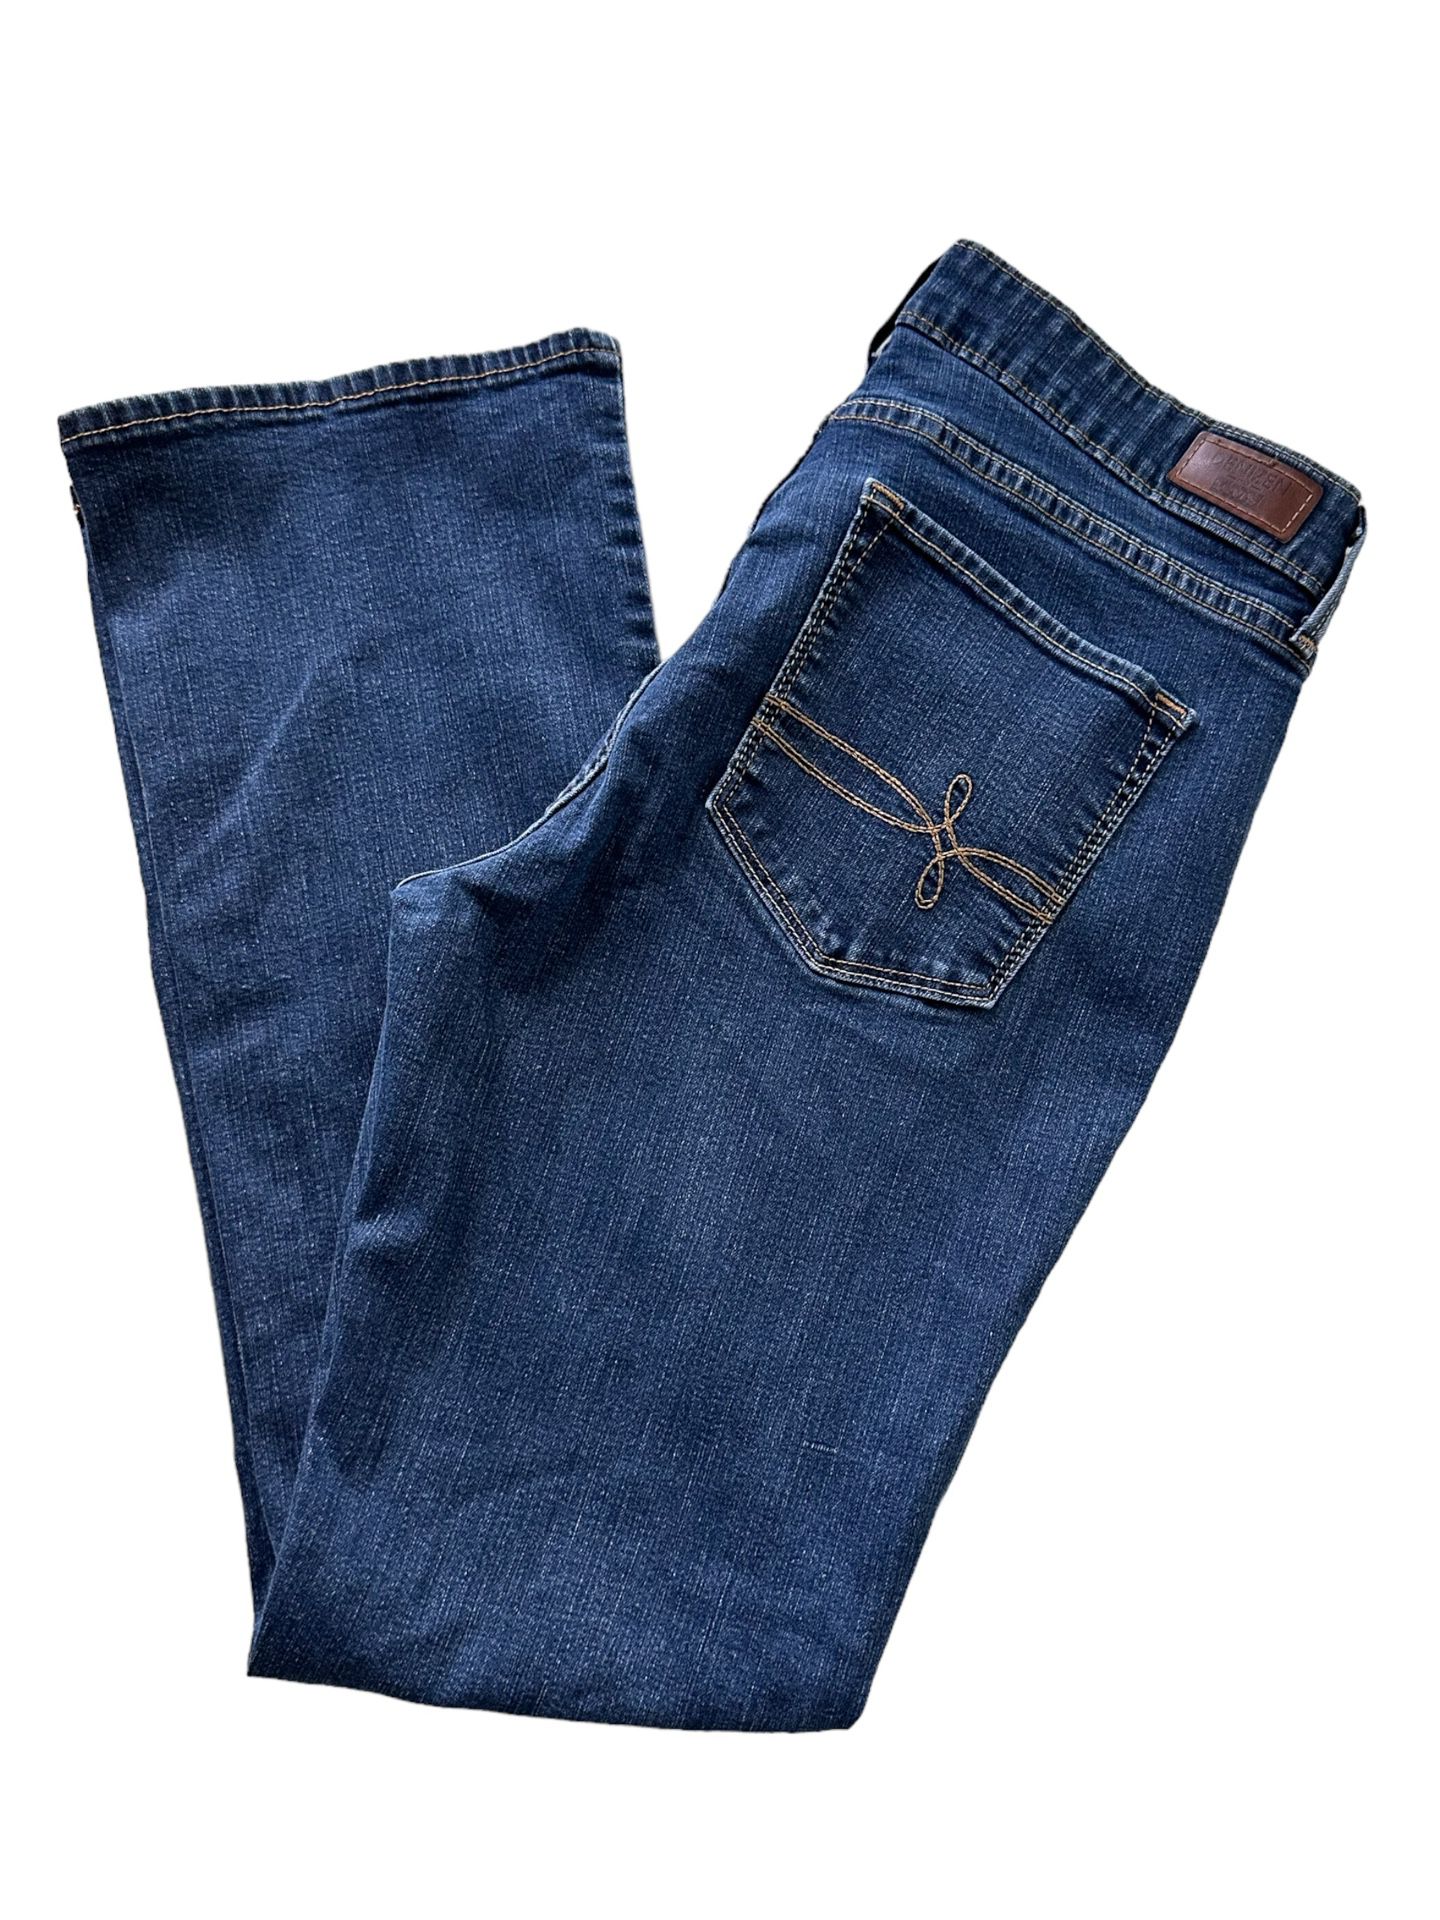 Denizen Levi’s Women’s Blue Modern Mid-Rise Bootcut Jeans Size 31